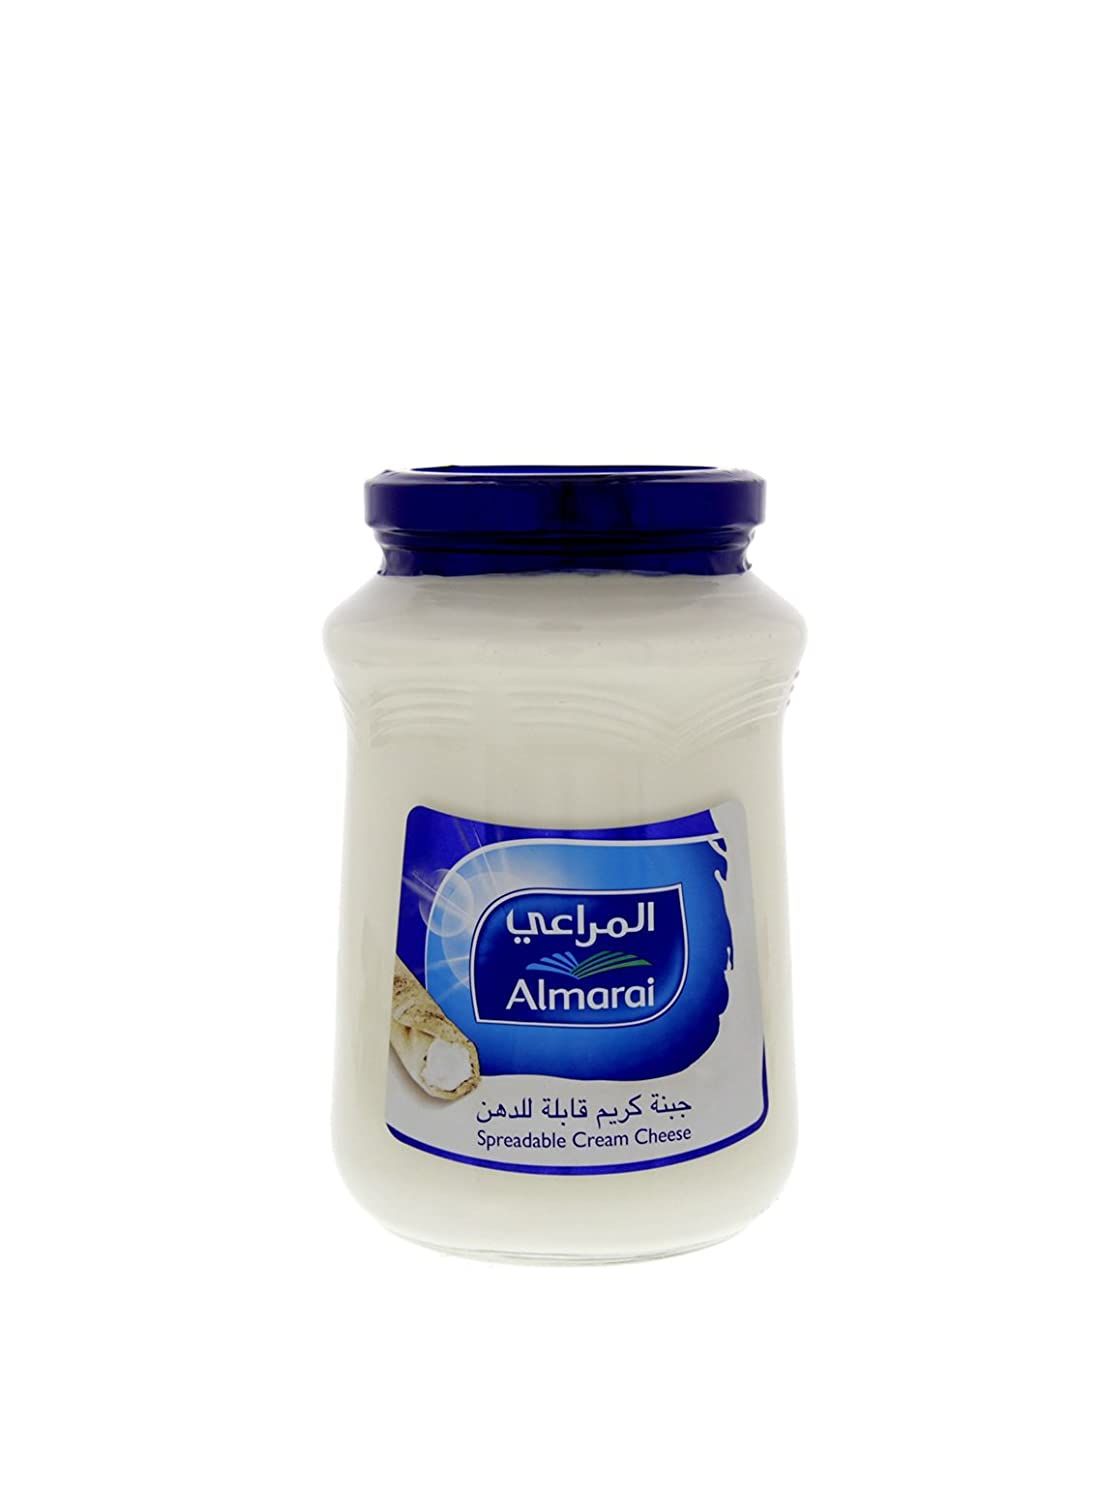 Almarai Spreadable Cream Cheese Image